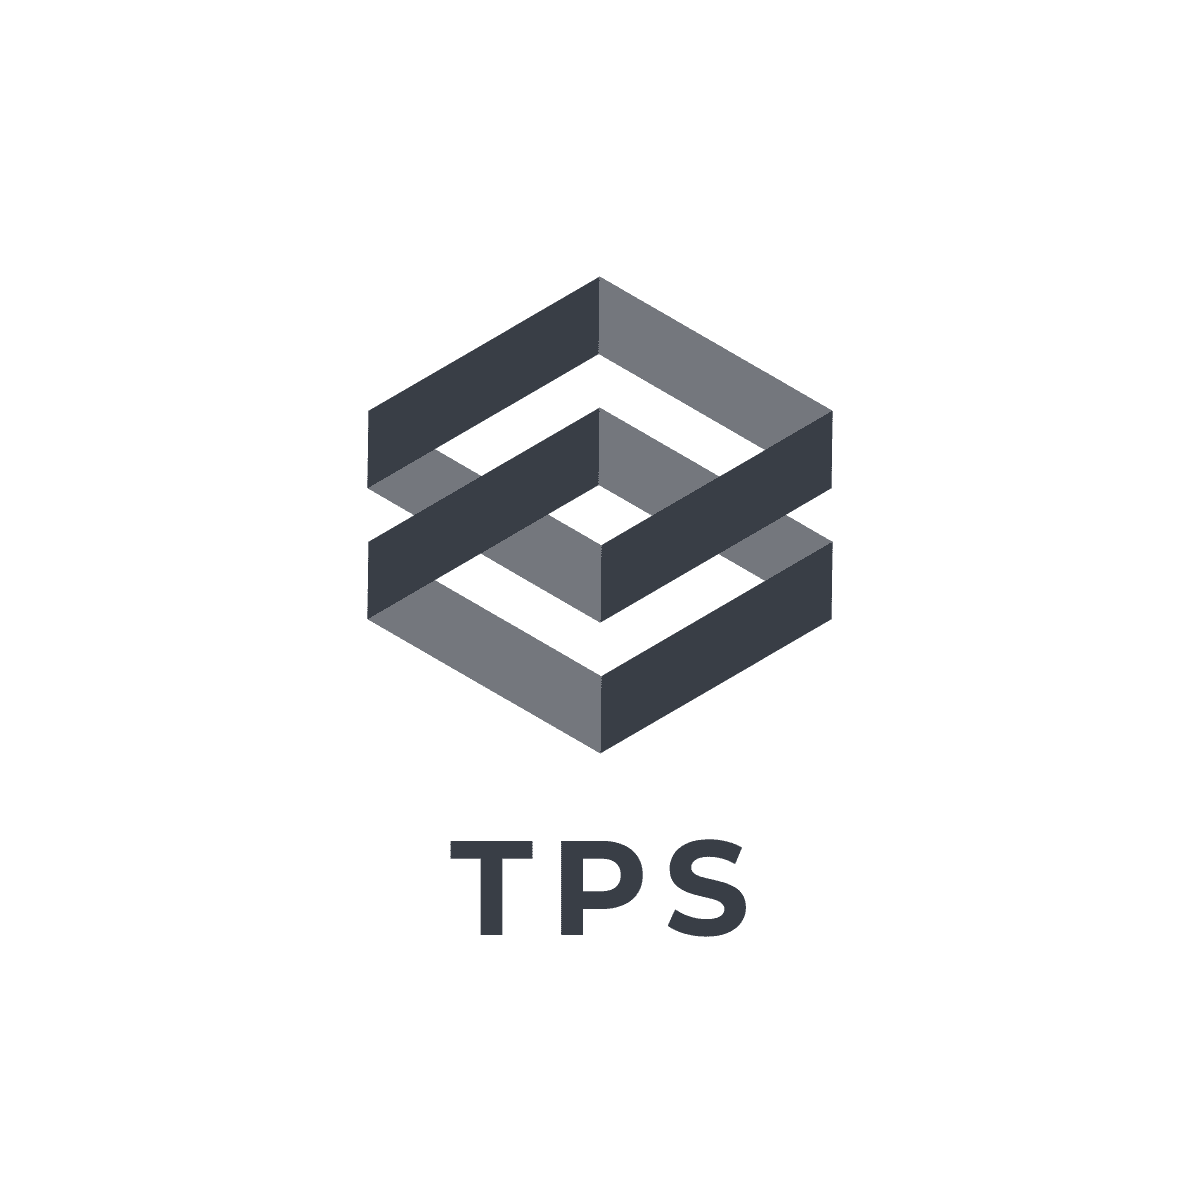 株式会社tps